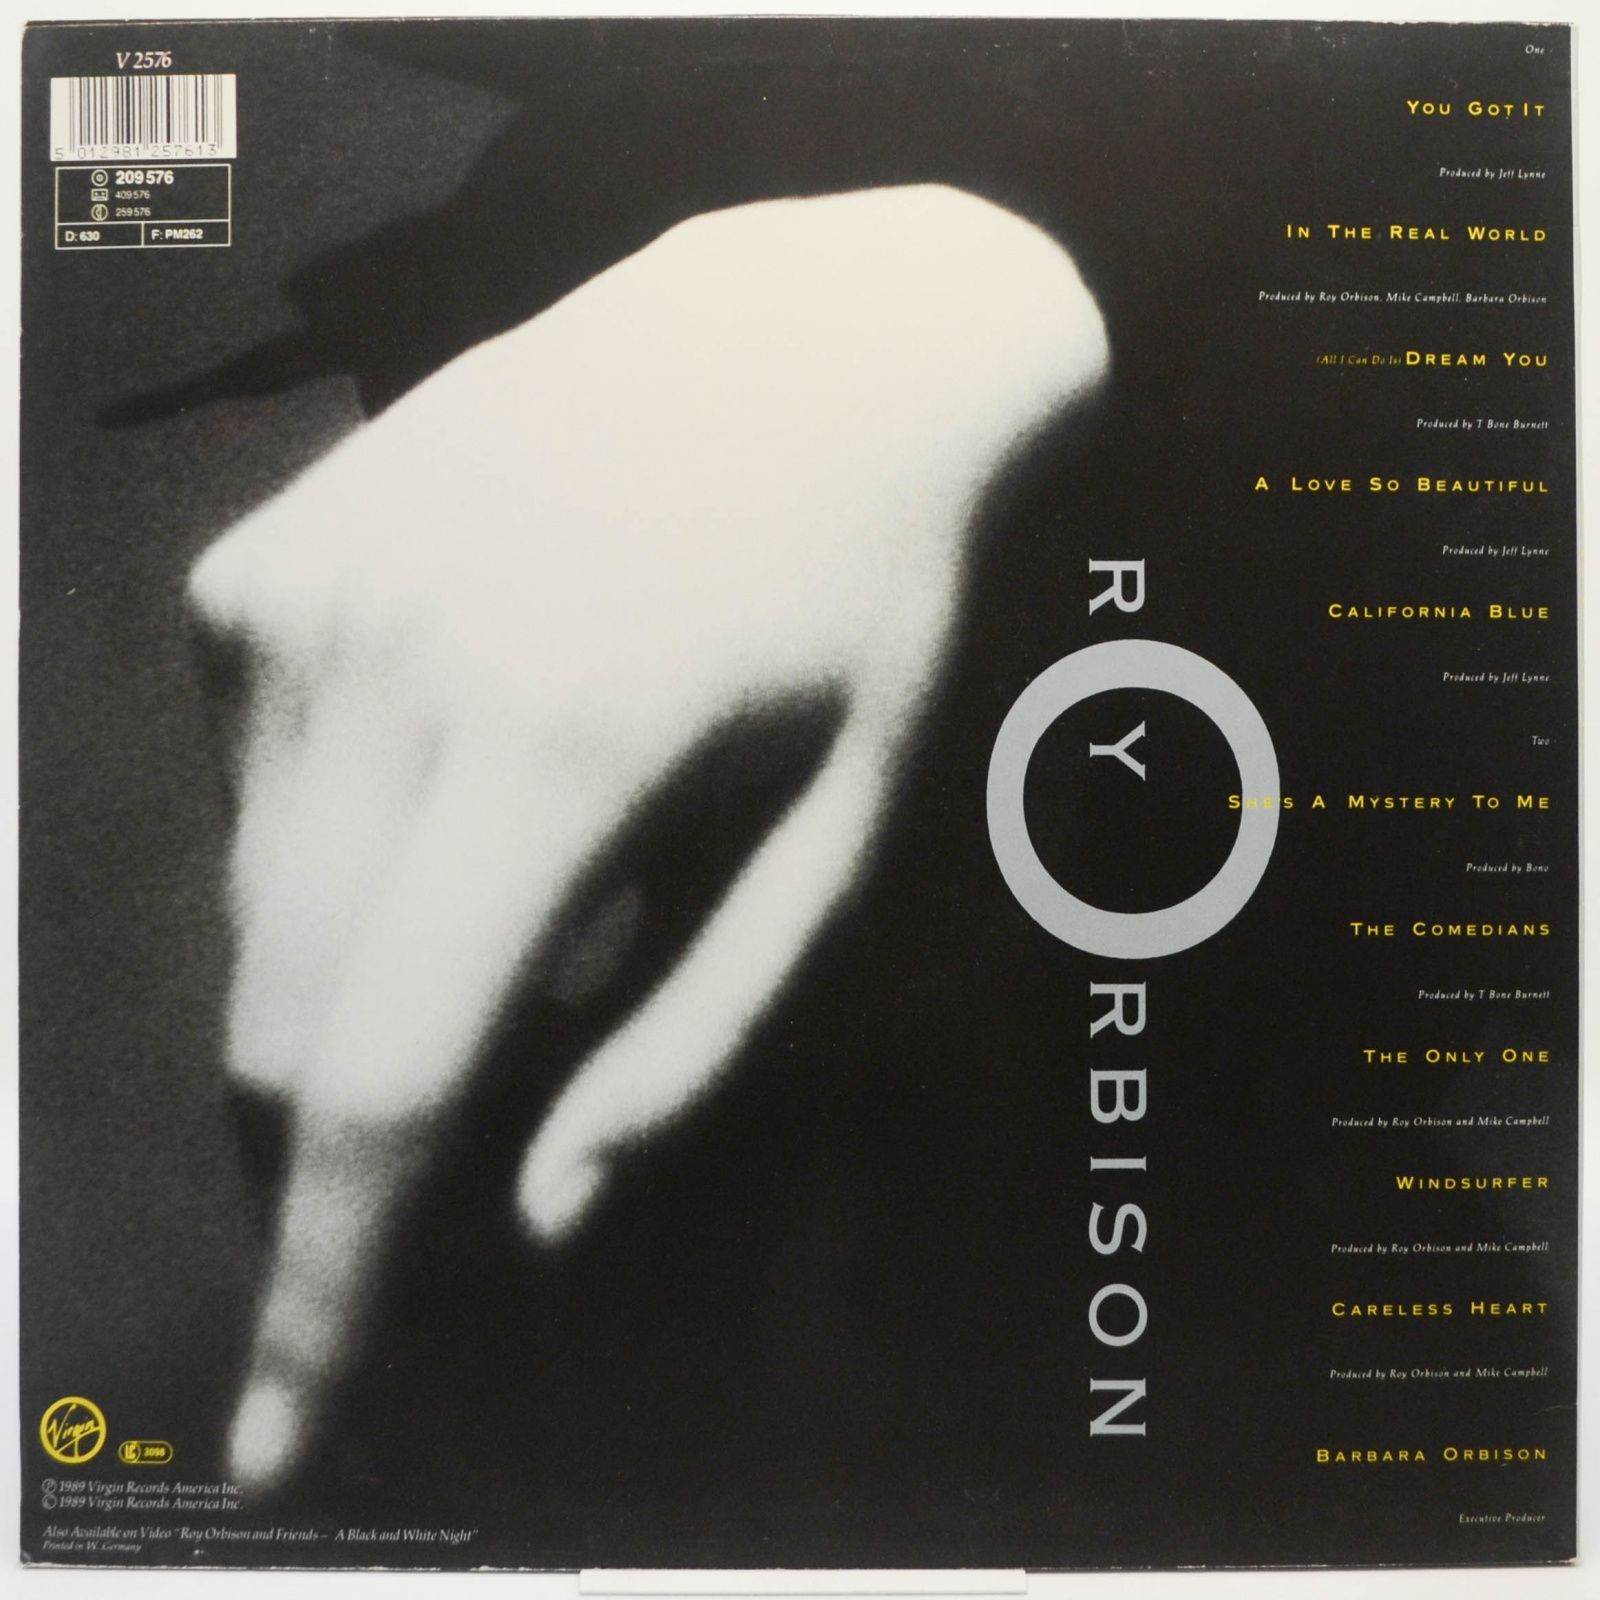 Roy Orbison — Mystery Girl, 1989